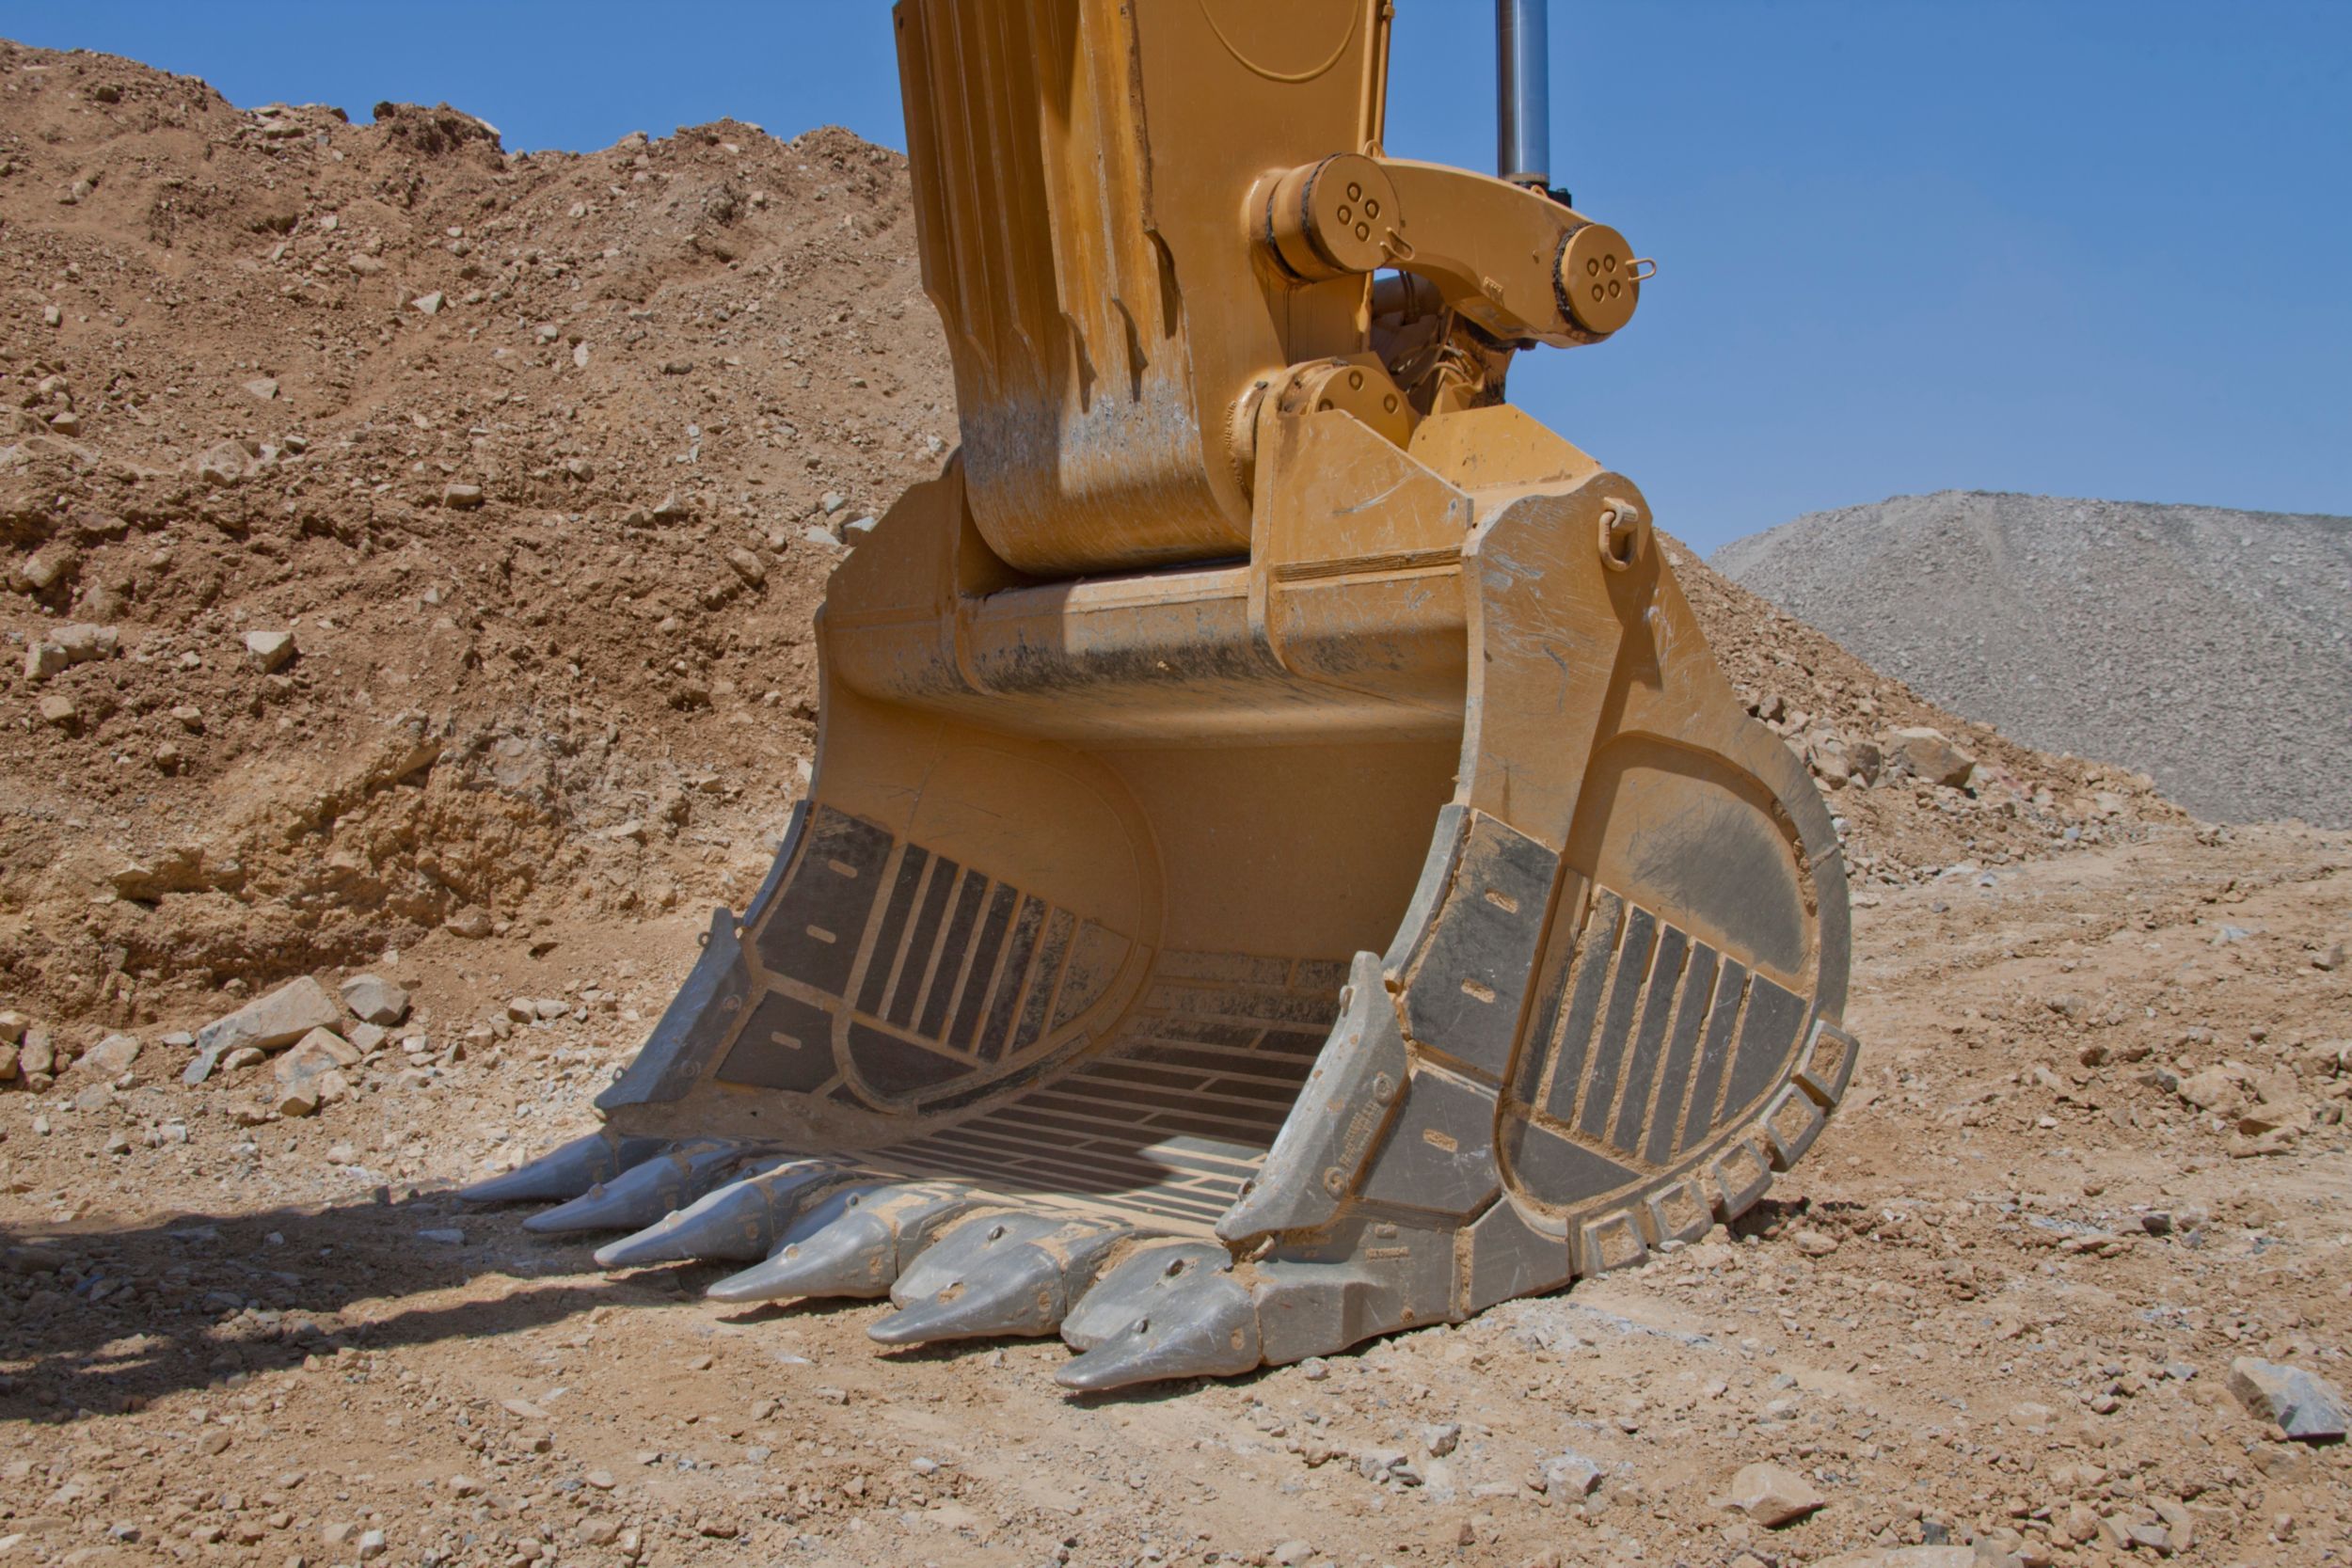 28m³ (36.6yd³) Heavy Rock bucket for the 6060 Hyd Mining Shovel